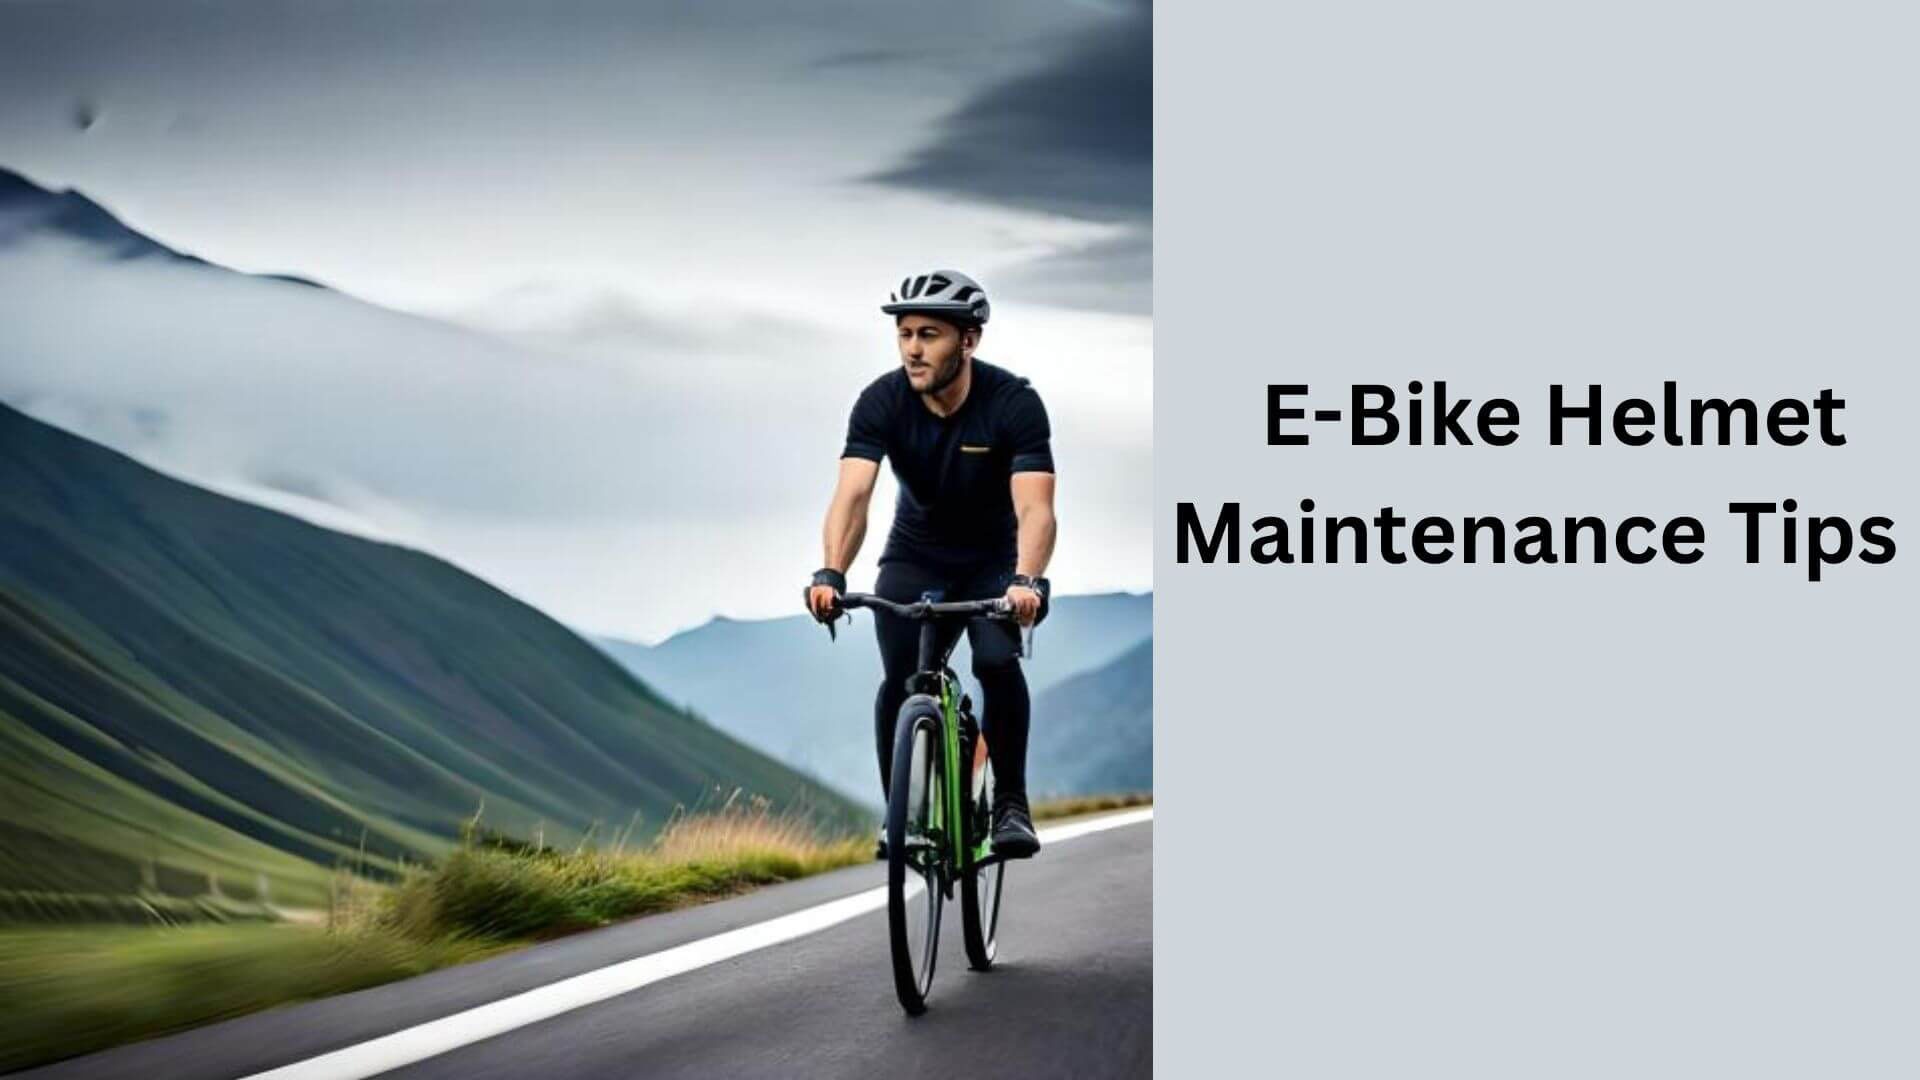 How to Maintenance E-Bike Helmet?